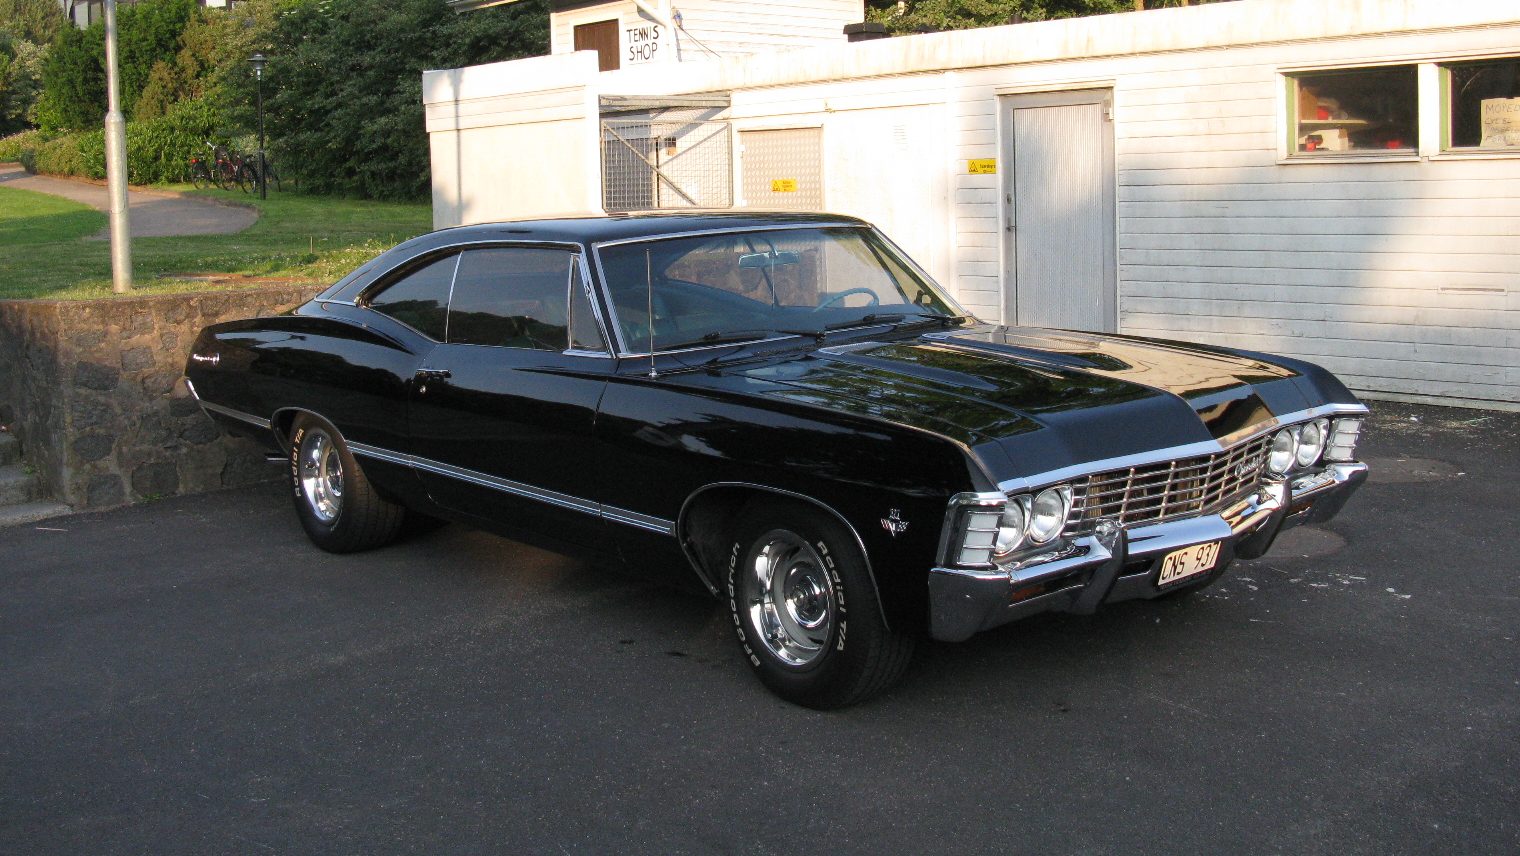 Chevrolet impala год. Шевроле Импала 1967. Шевроле Импала 1967 черная. Shavrale Tempala 1967. Шевроле Импала 67 чёрная.